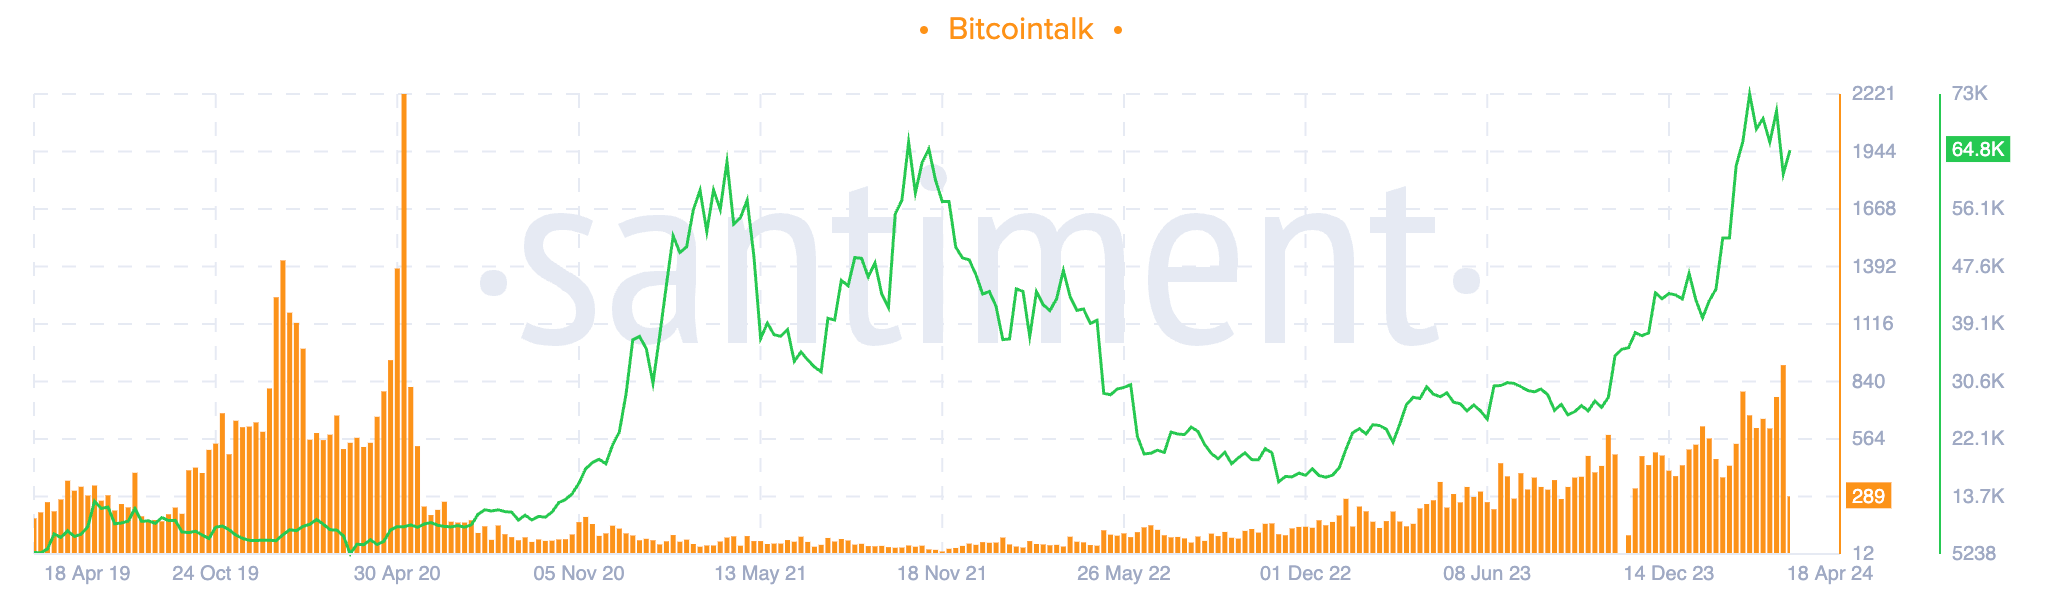 Bitcoin, Bitcoin Talk interest halved (Santiment)